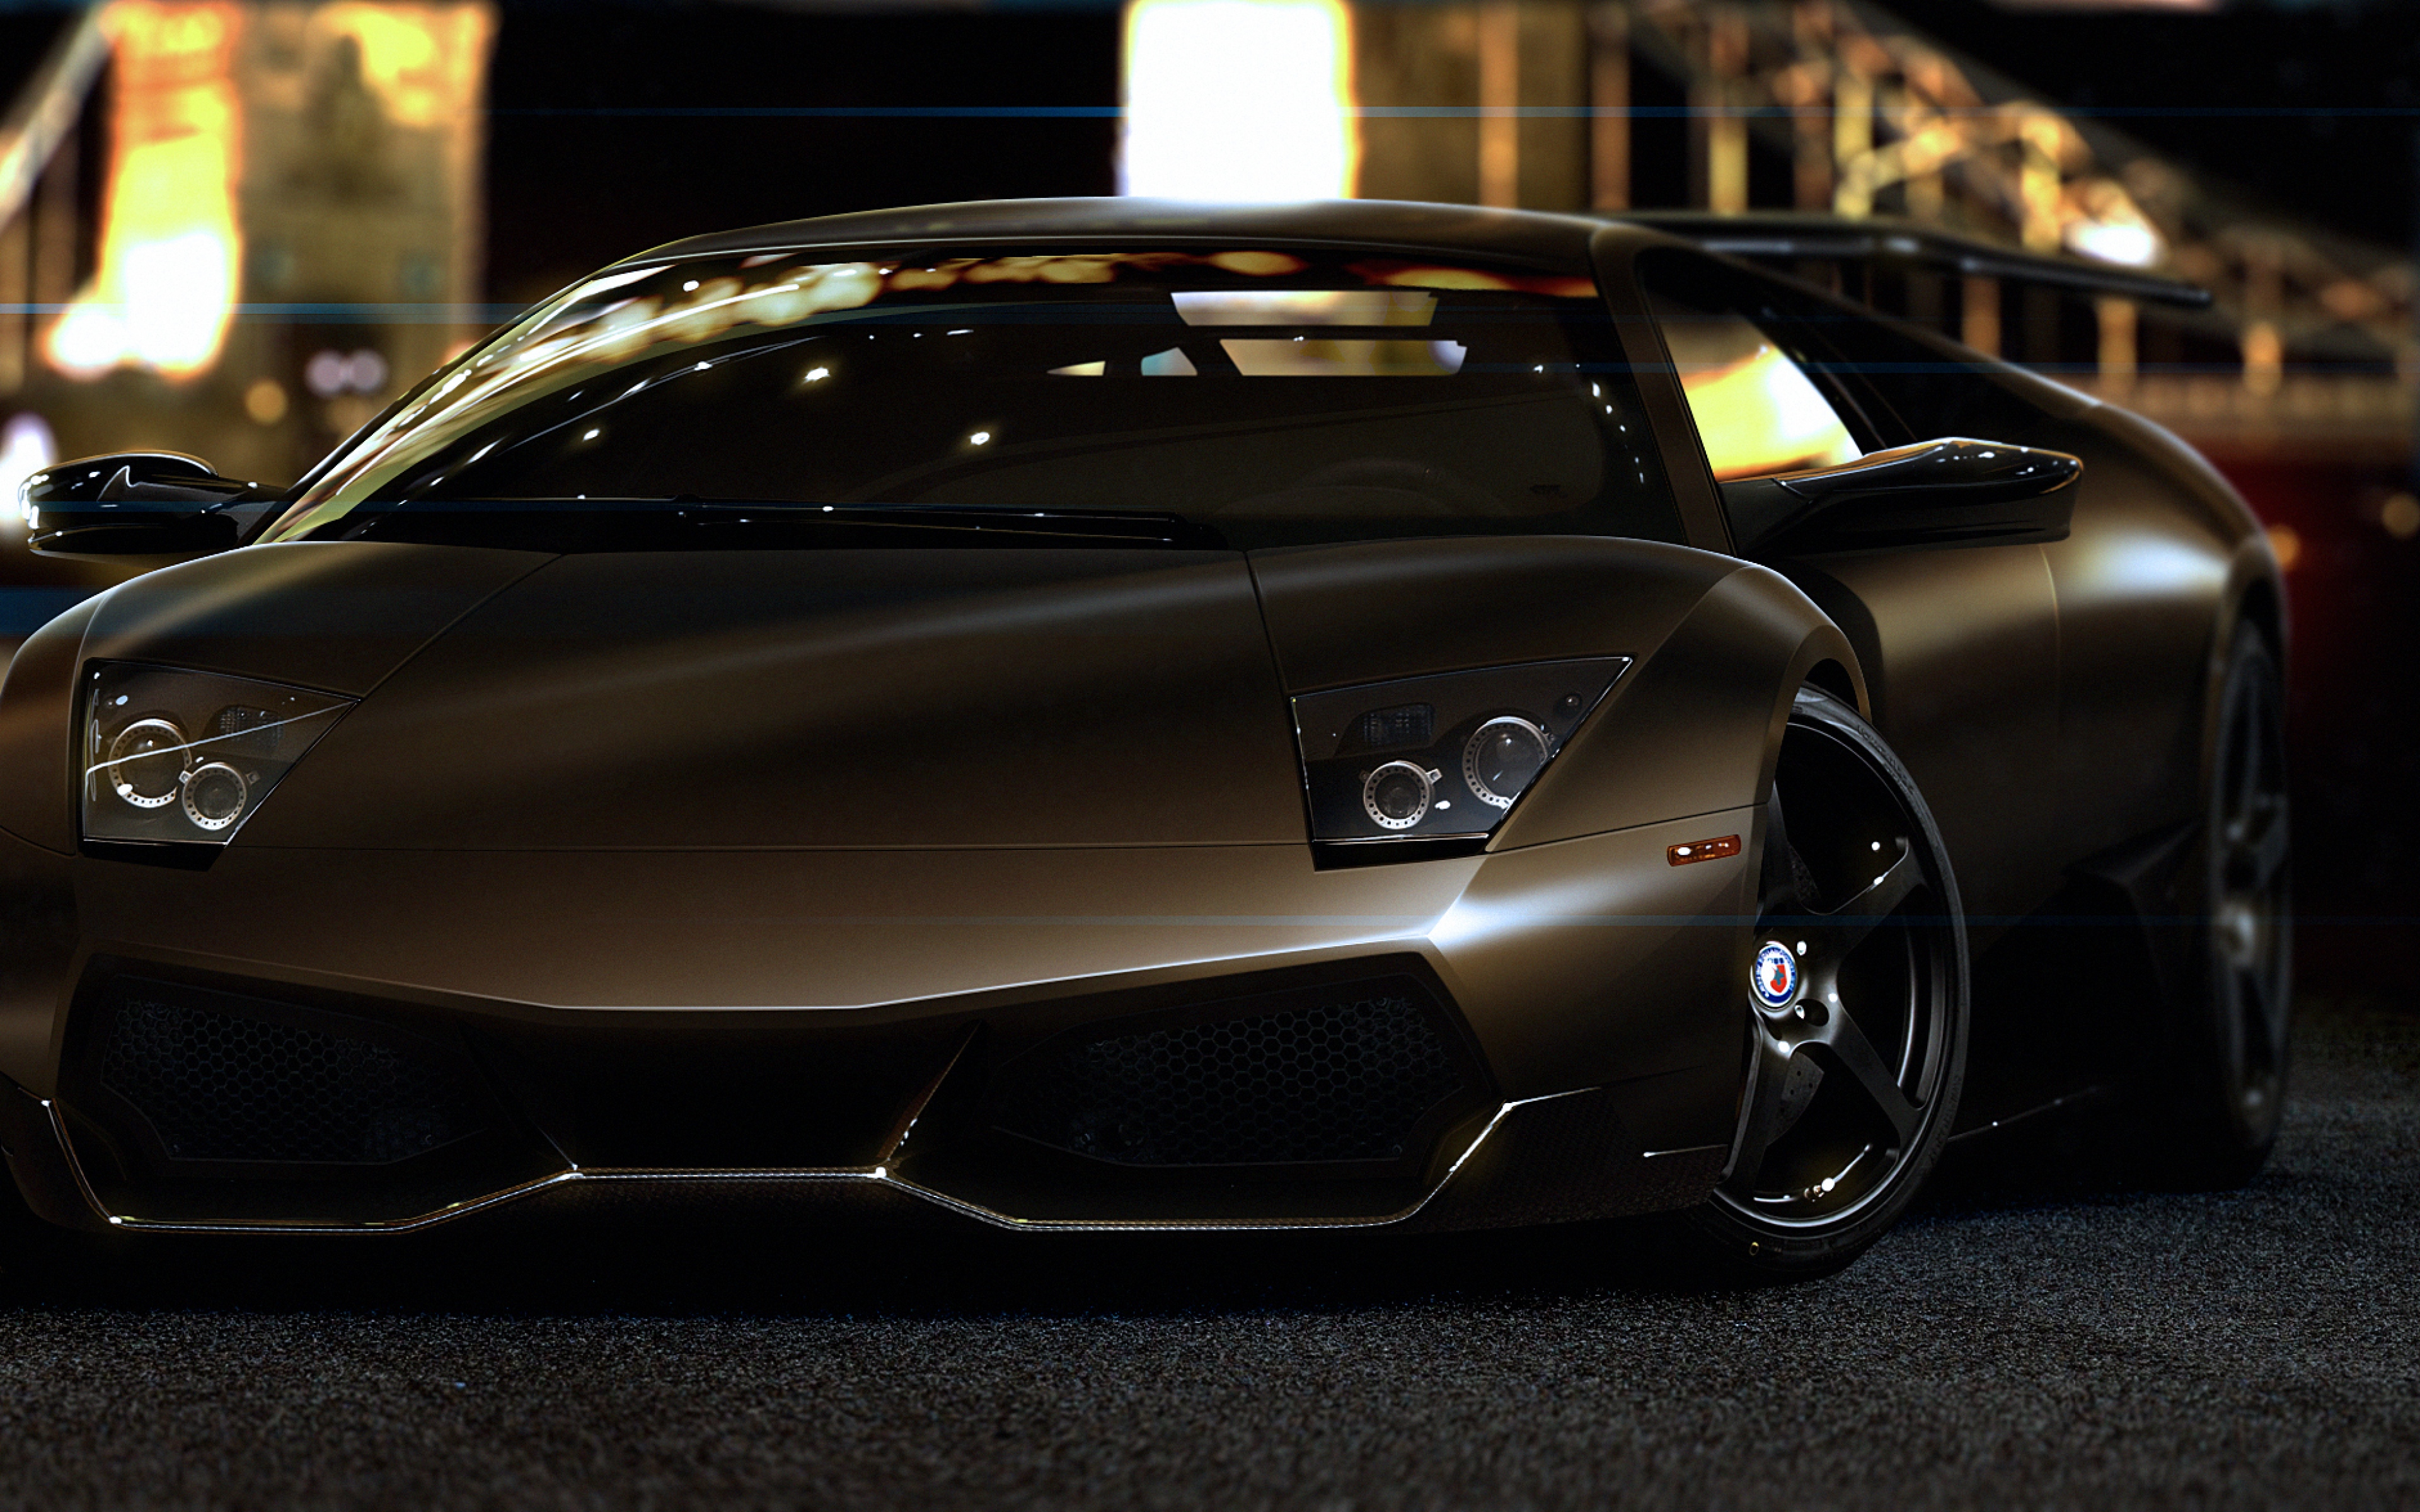 Lamborghini Car Hd Photos Free Download